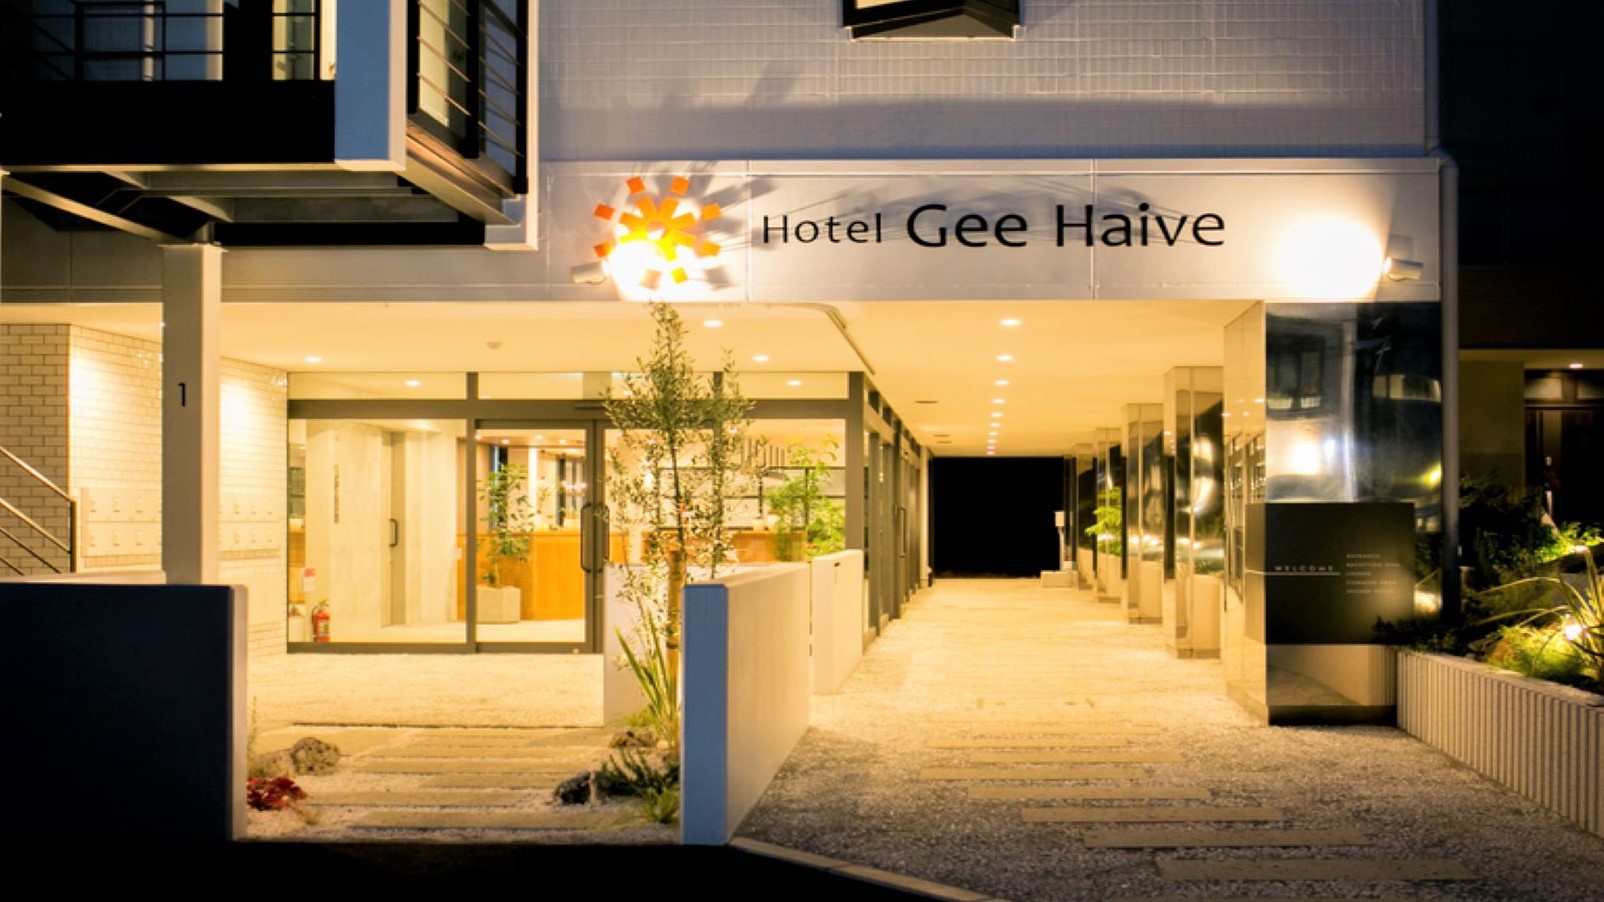 Hotel Gee Haive(ホテル ジー ハイブ) image